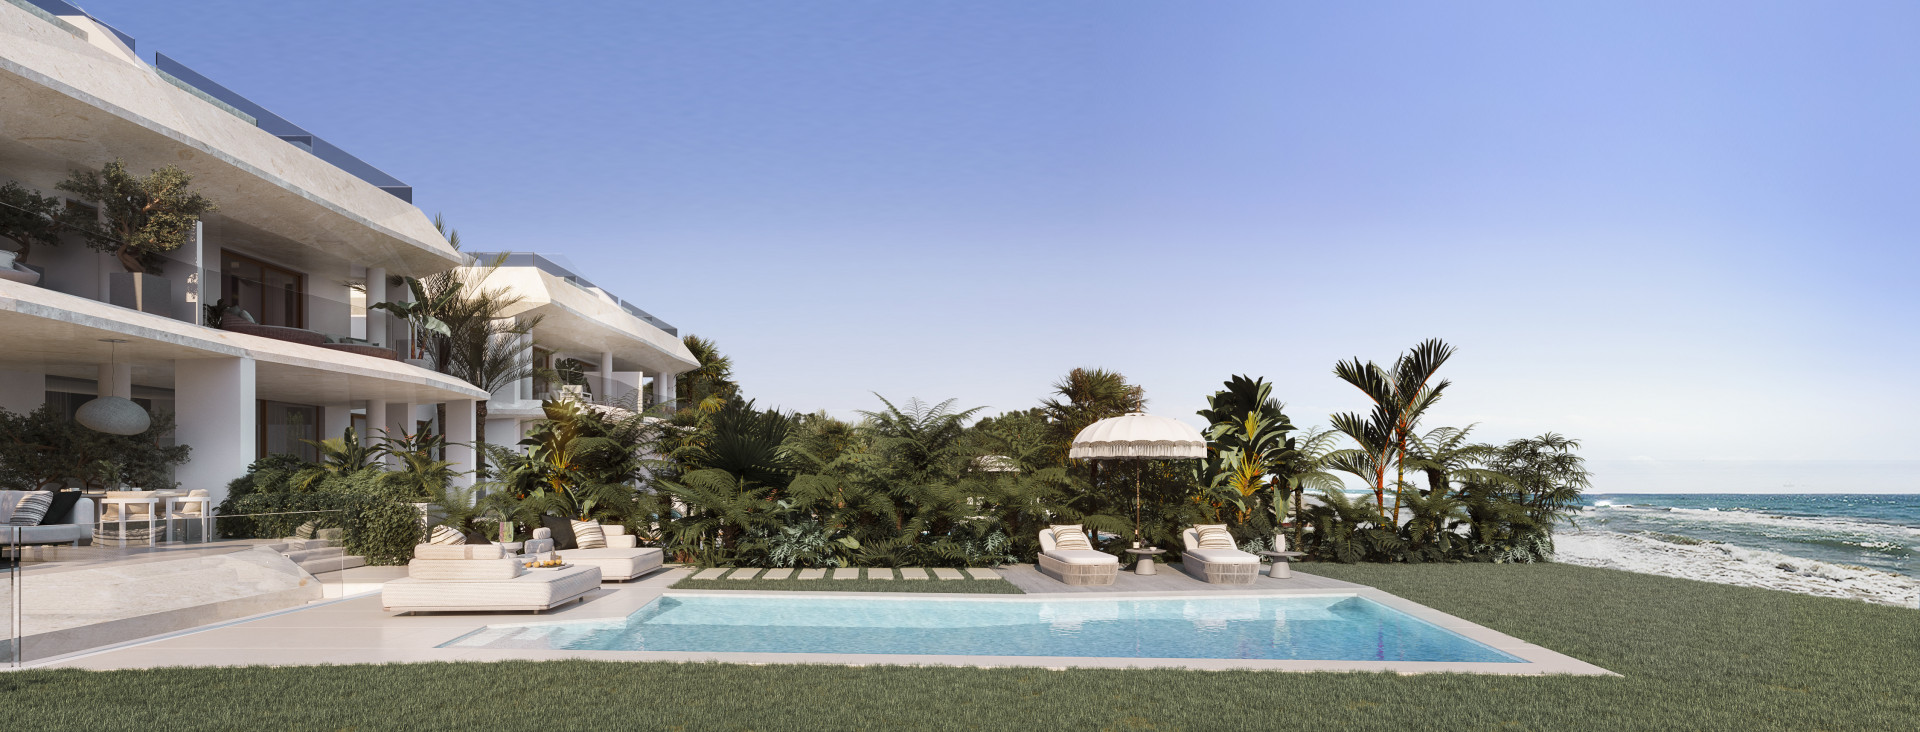 Black Pearl: Luxury residential development comprising only 4 frontline beach villas in Marbella East. | Image 2